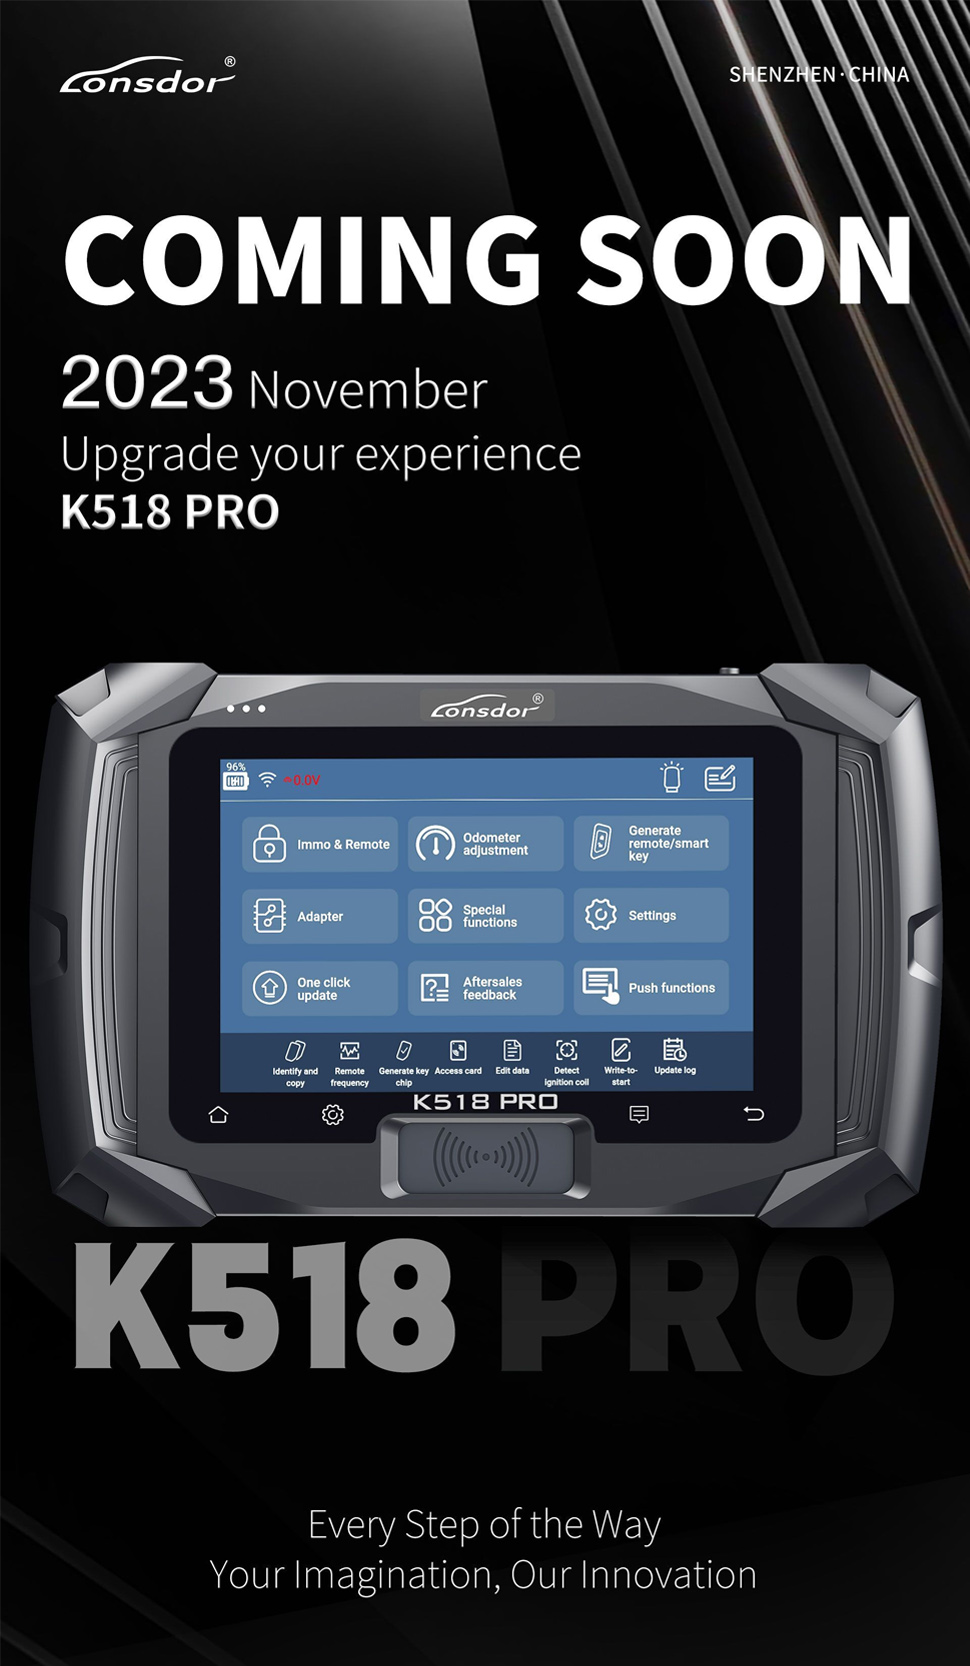 Dispositif de programmation de clé Lonsdor K518 Pro